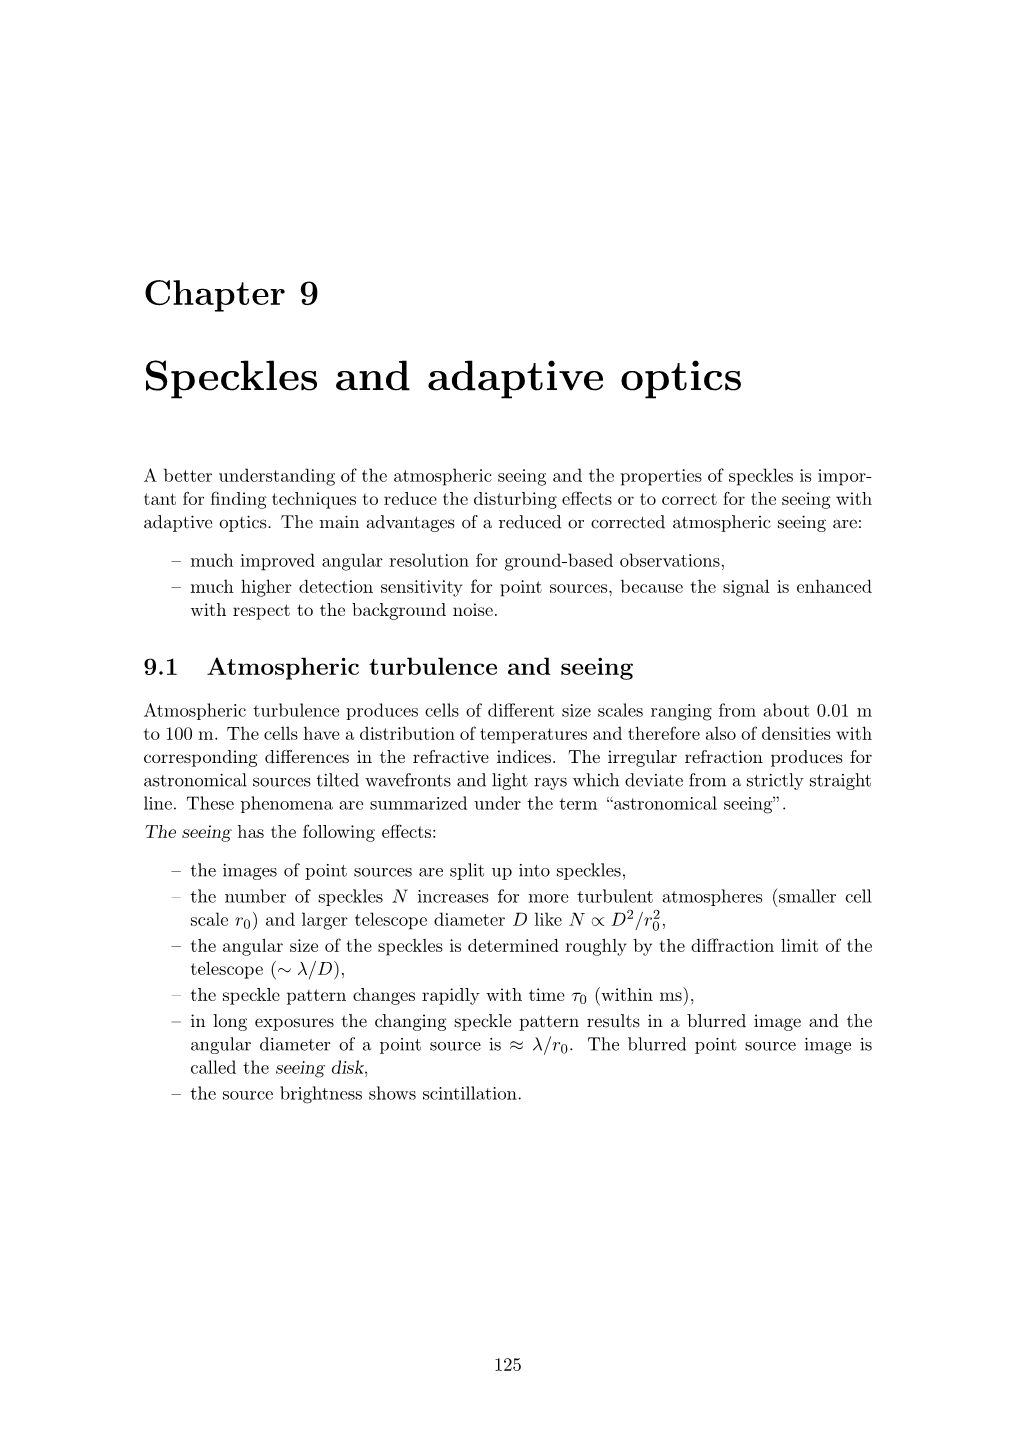 Speckles and Adaptive Optics